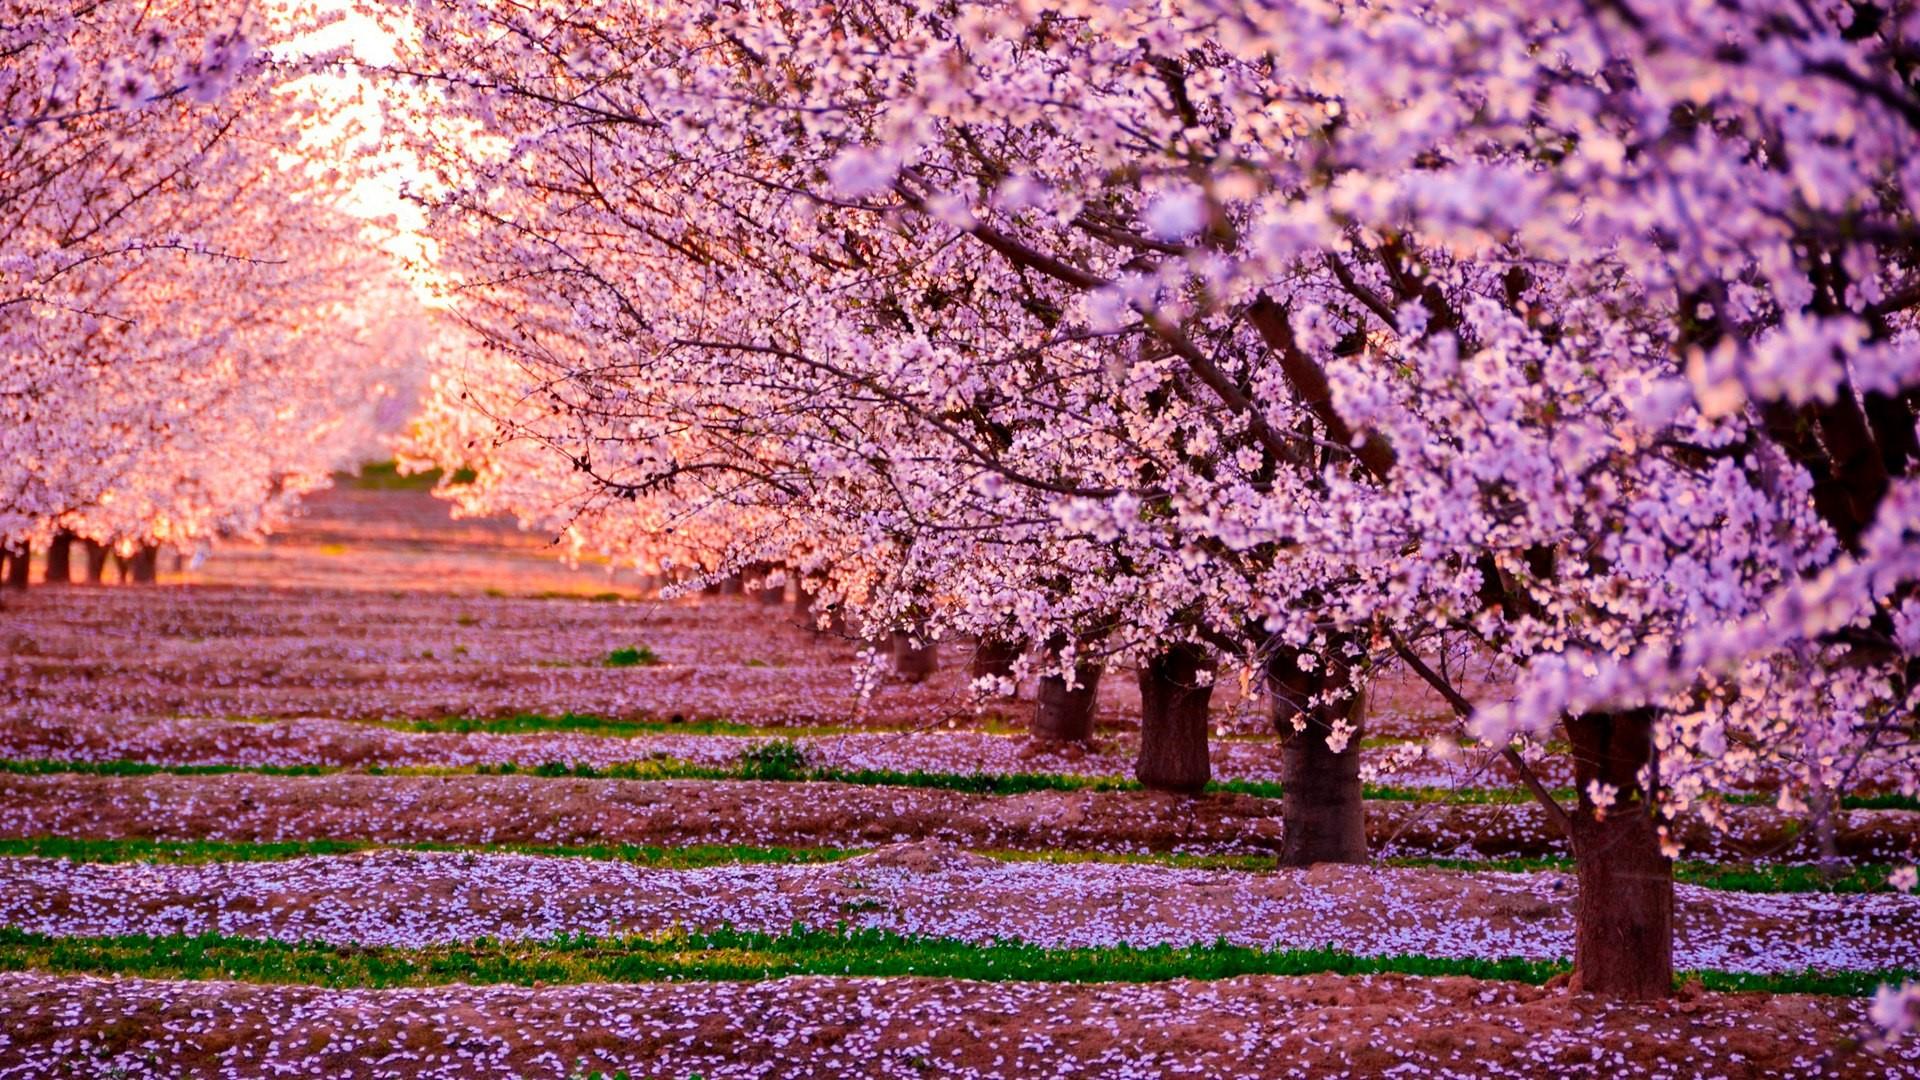 Spring Cherry Blossom Wallpaper Free Spring Cherry Blossom